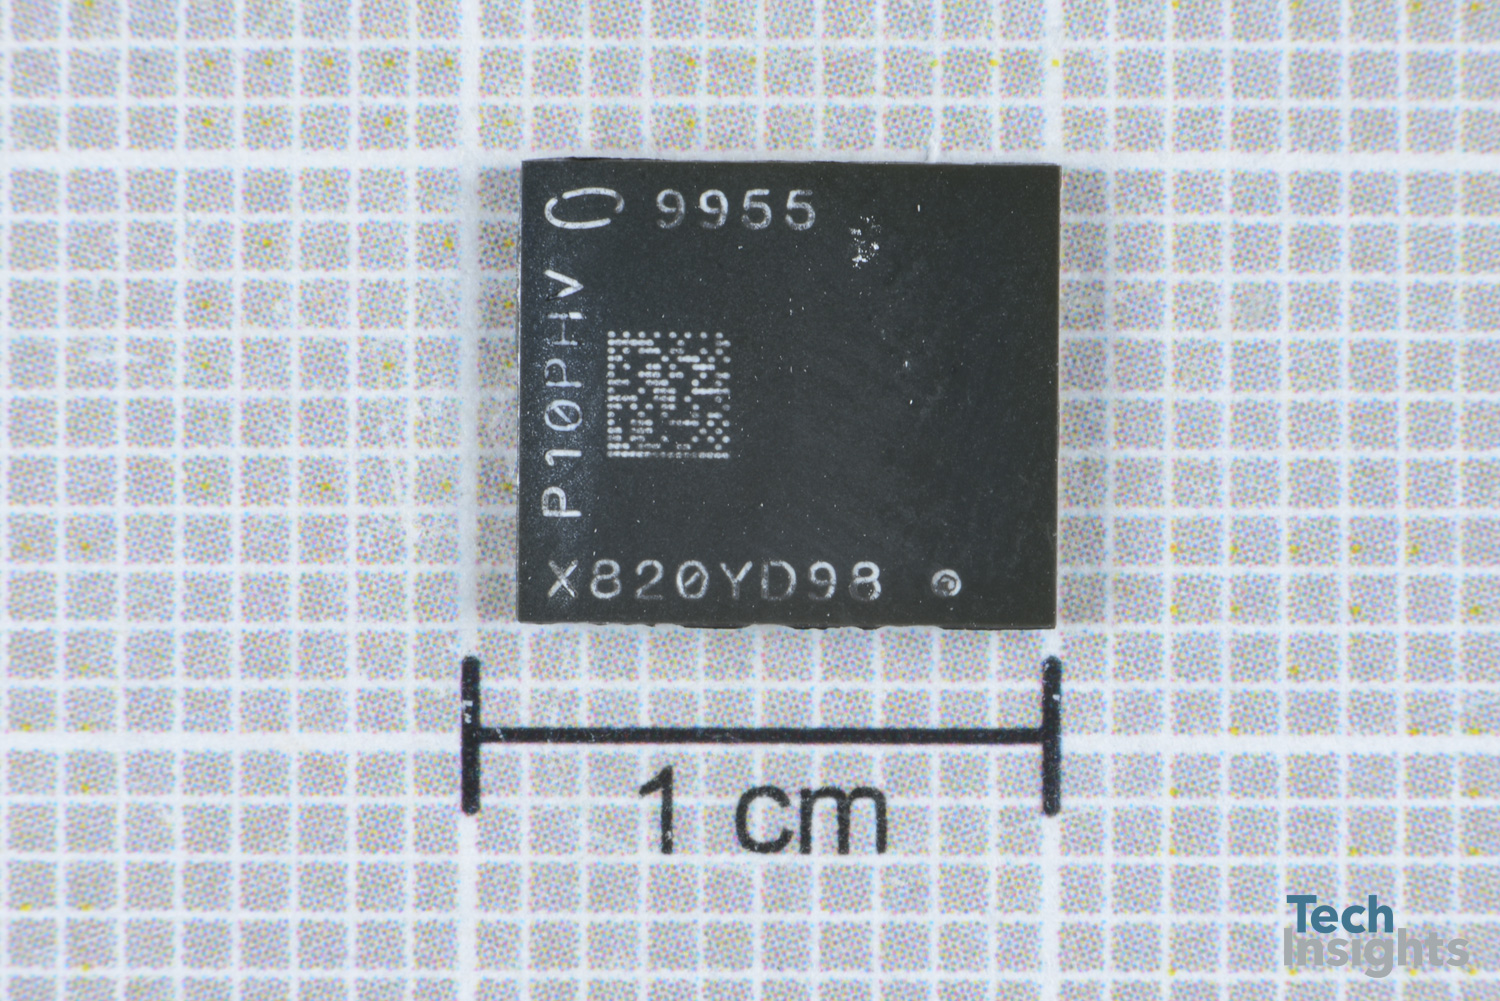 Intel Baseband Processor PMB9955 found in the iPhone Xs Max